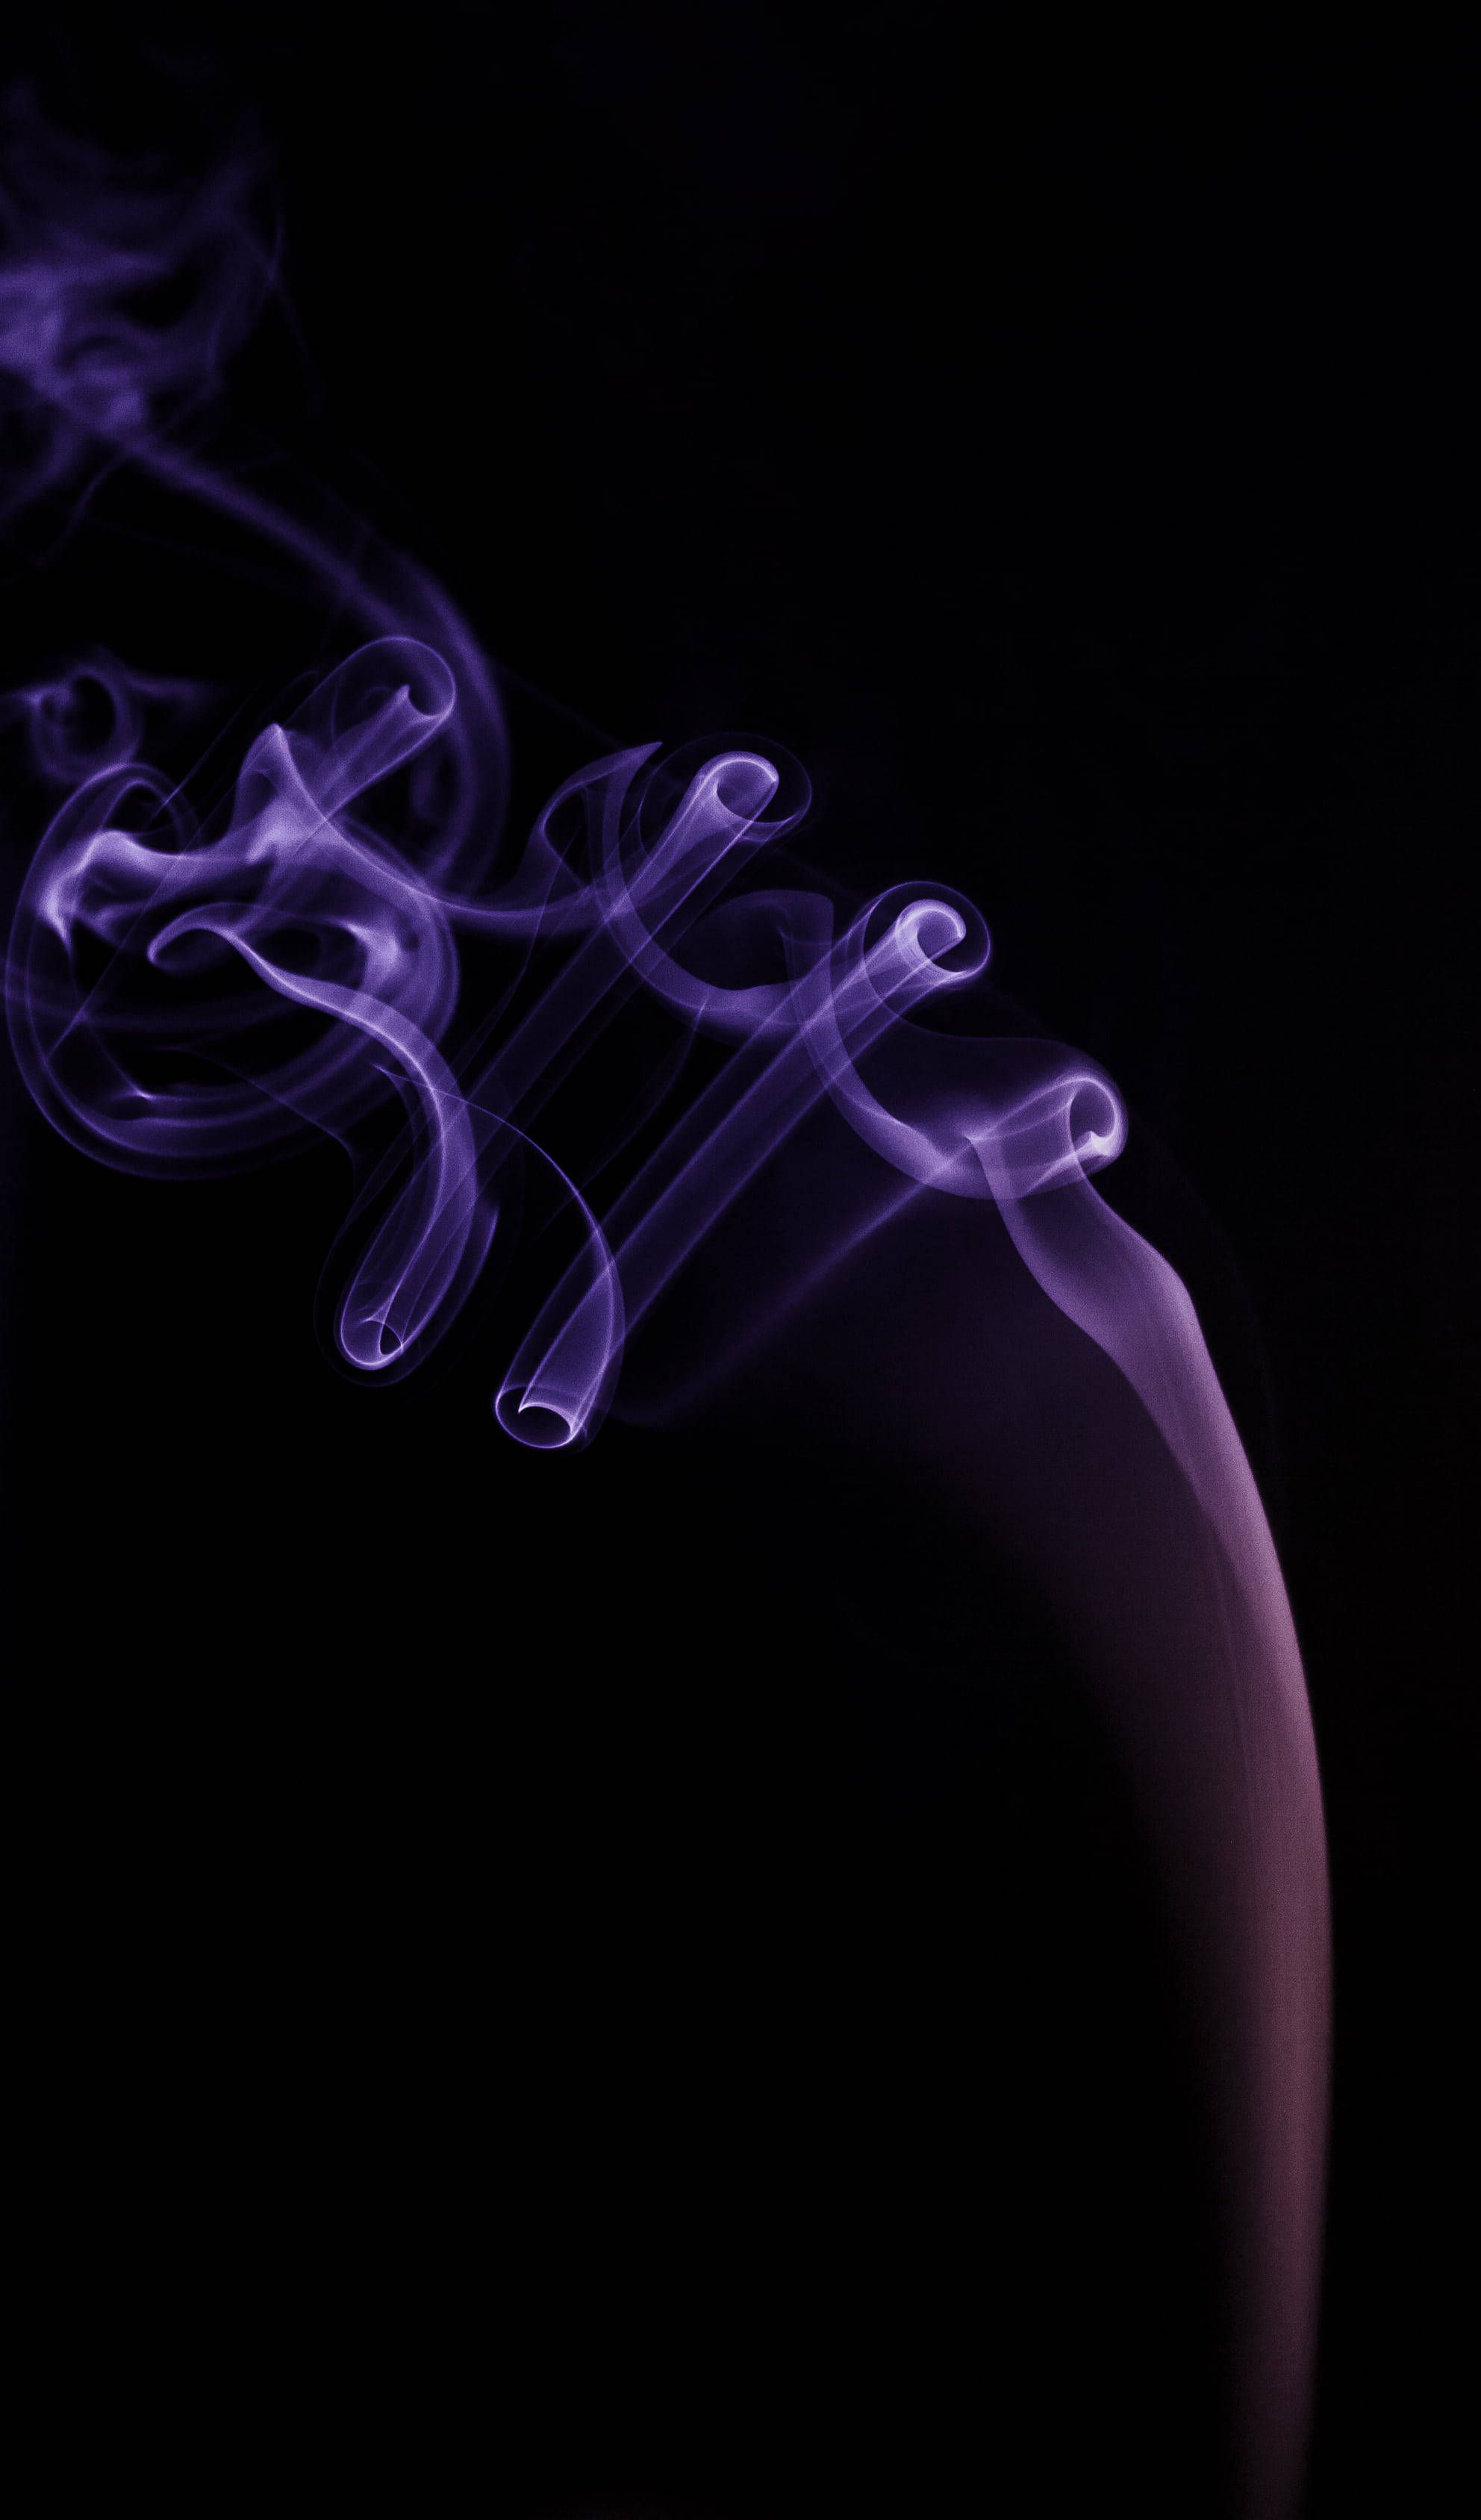 Purple smoke on a black background - Smoke